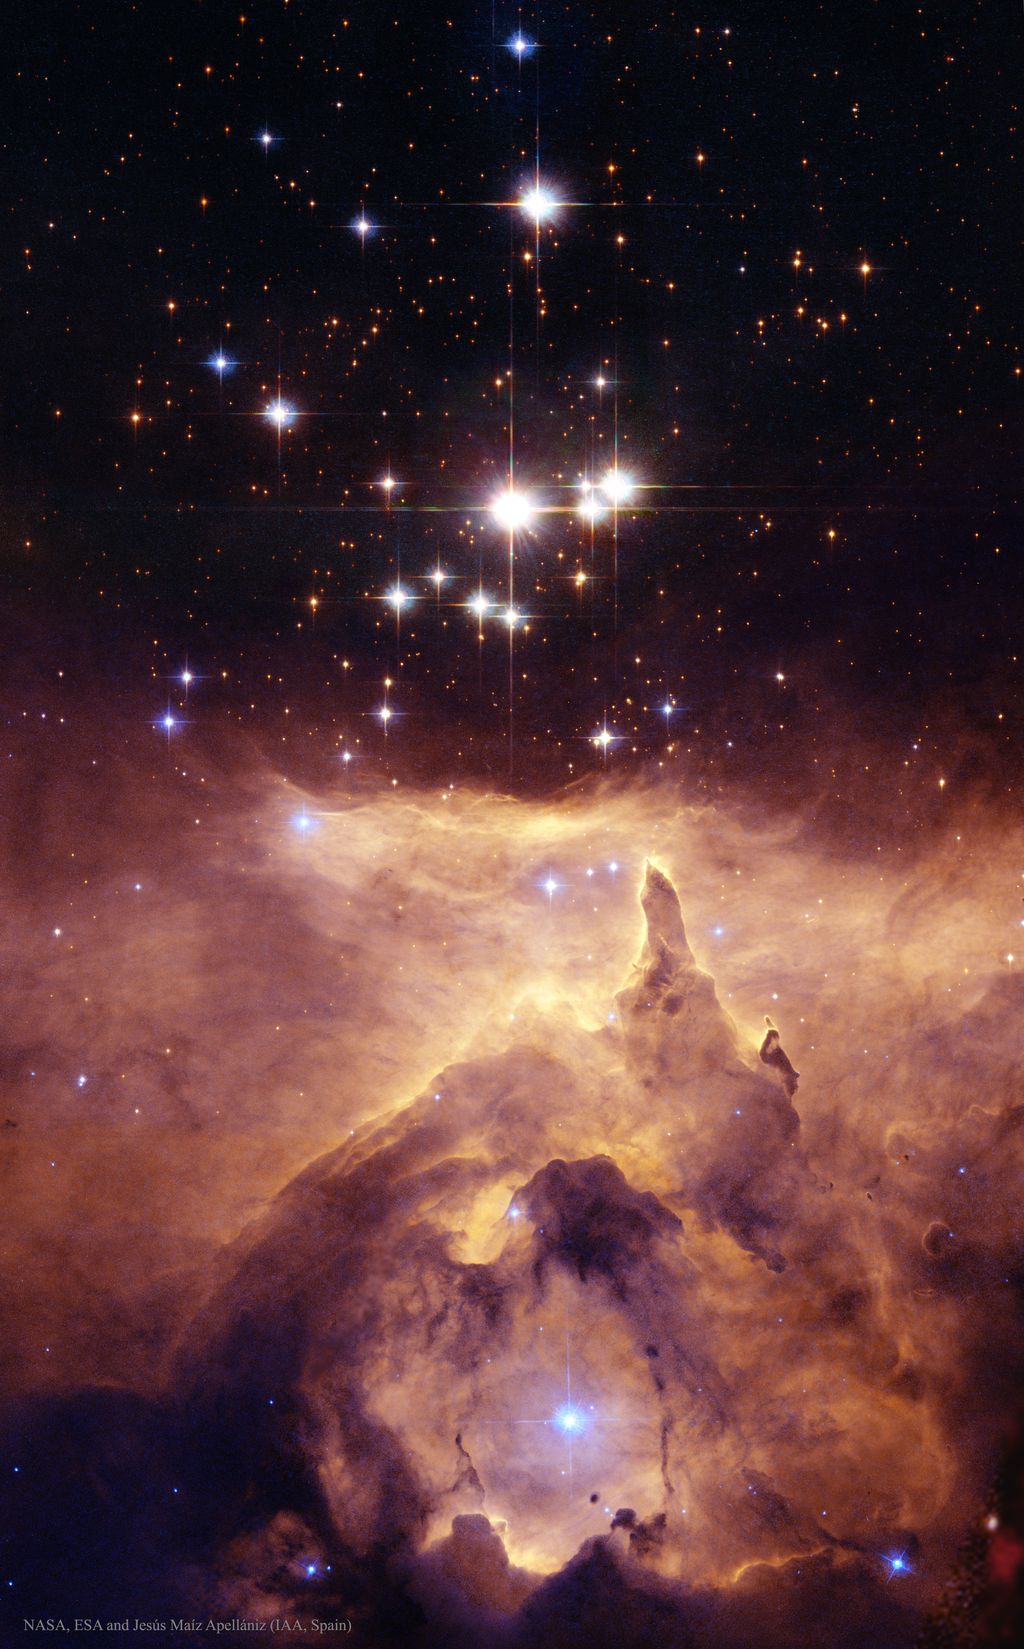 Imagem: NASA/ESA/Jesús Maíz Apellániz